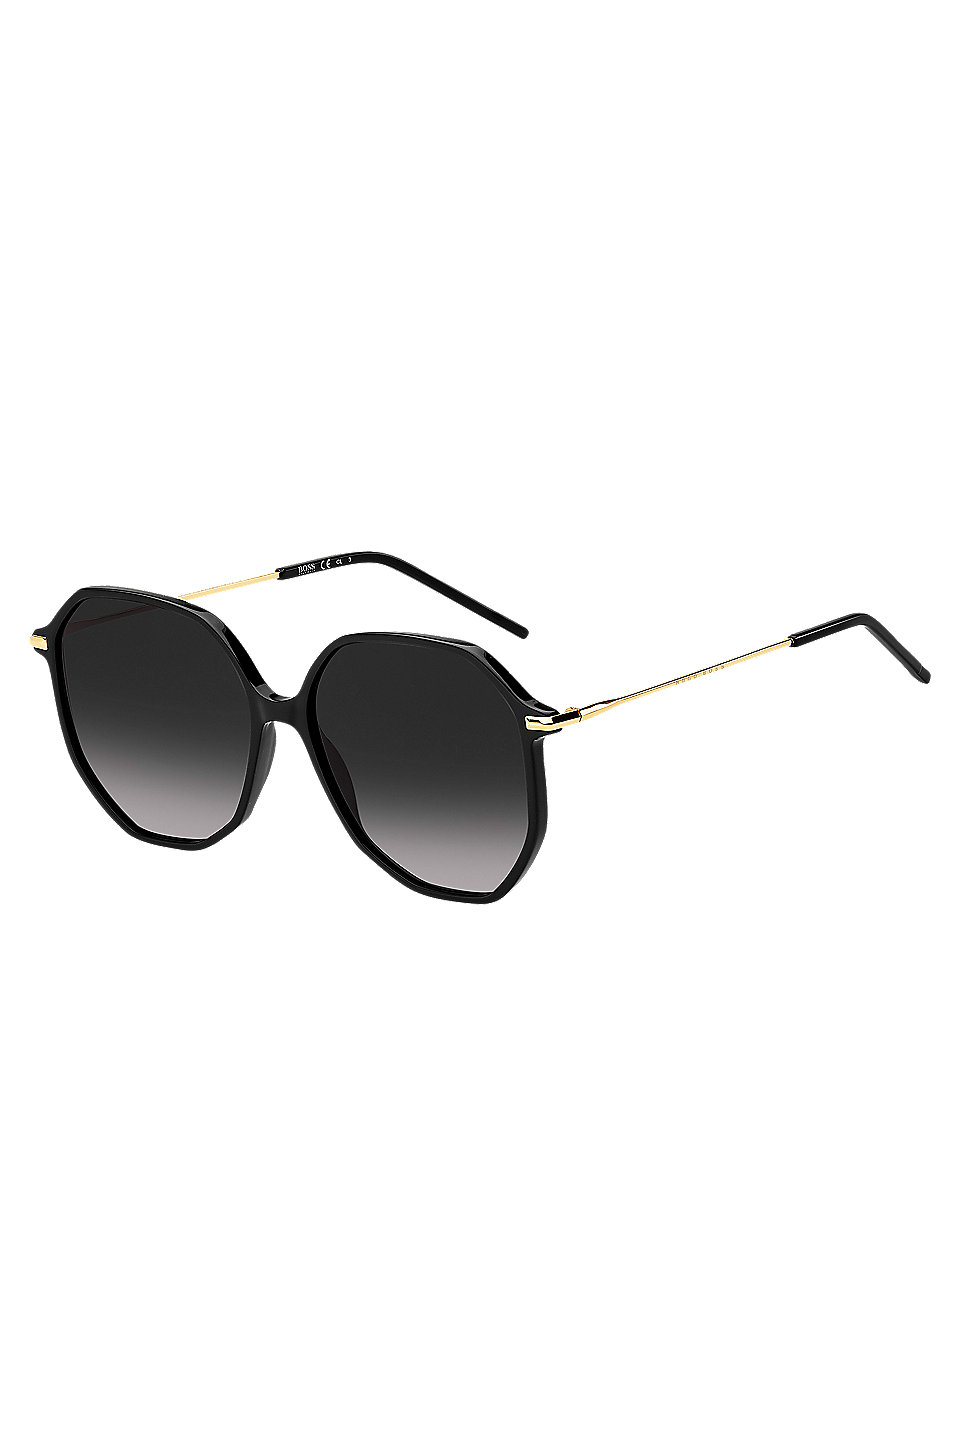 BOSS - Black-acetate sunglasses with tubular temples